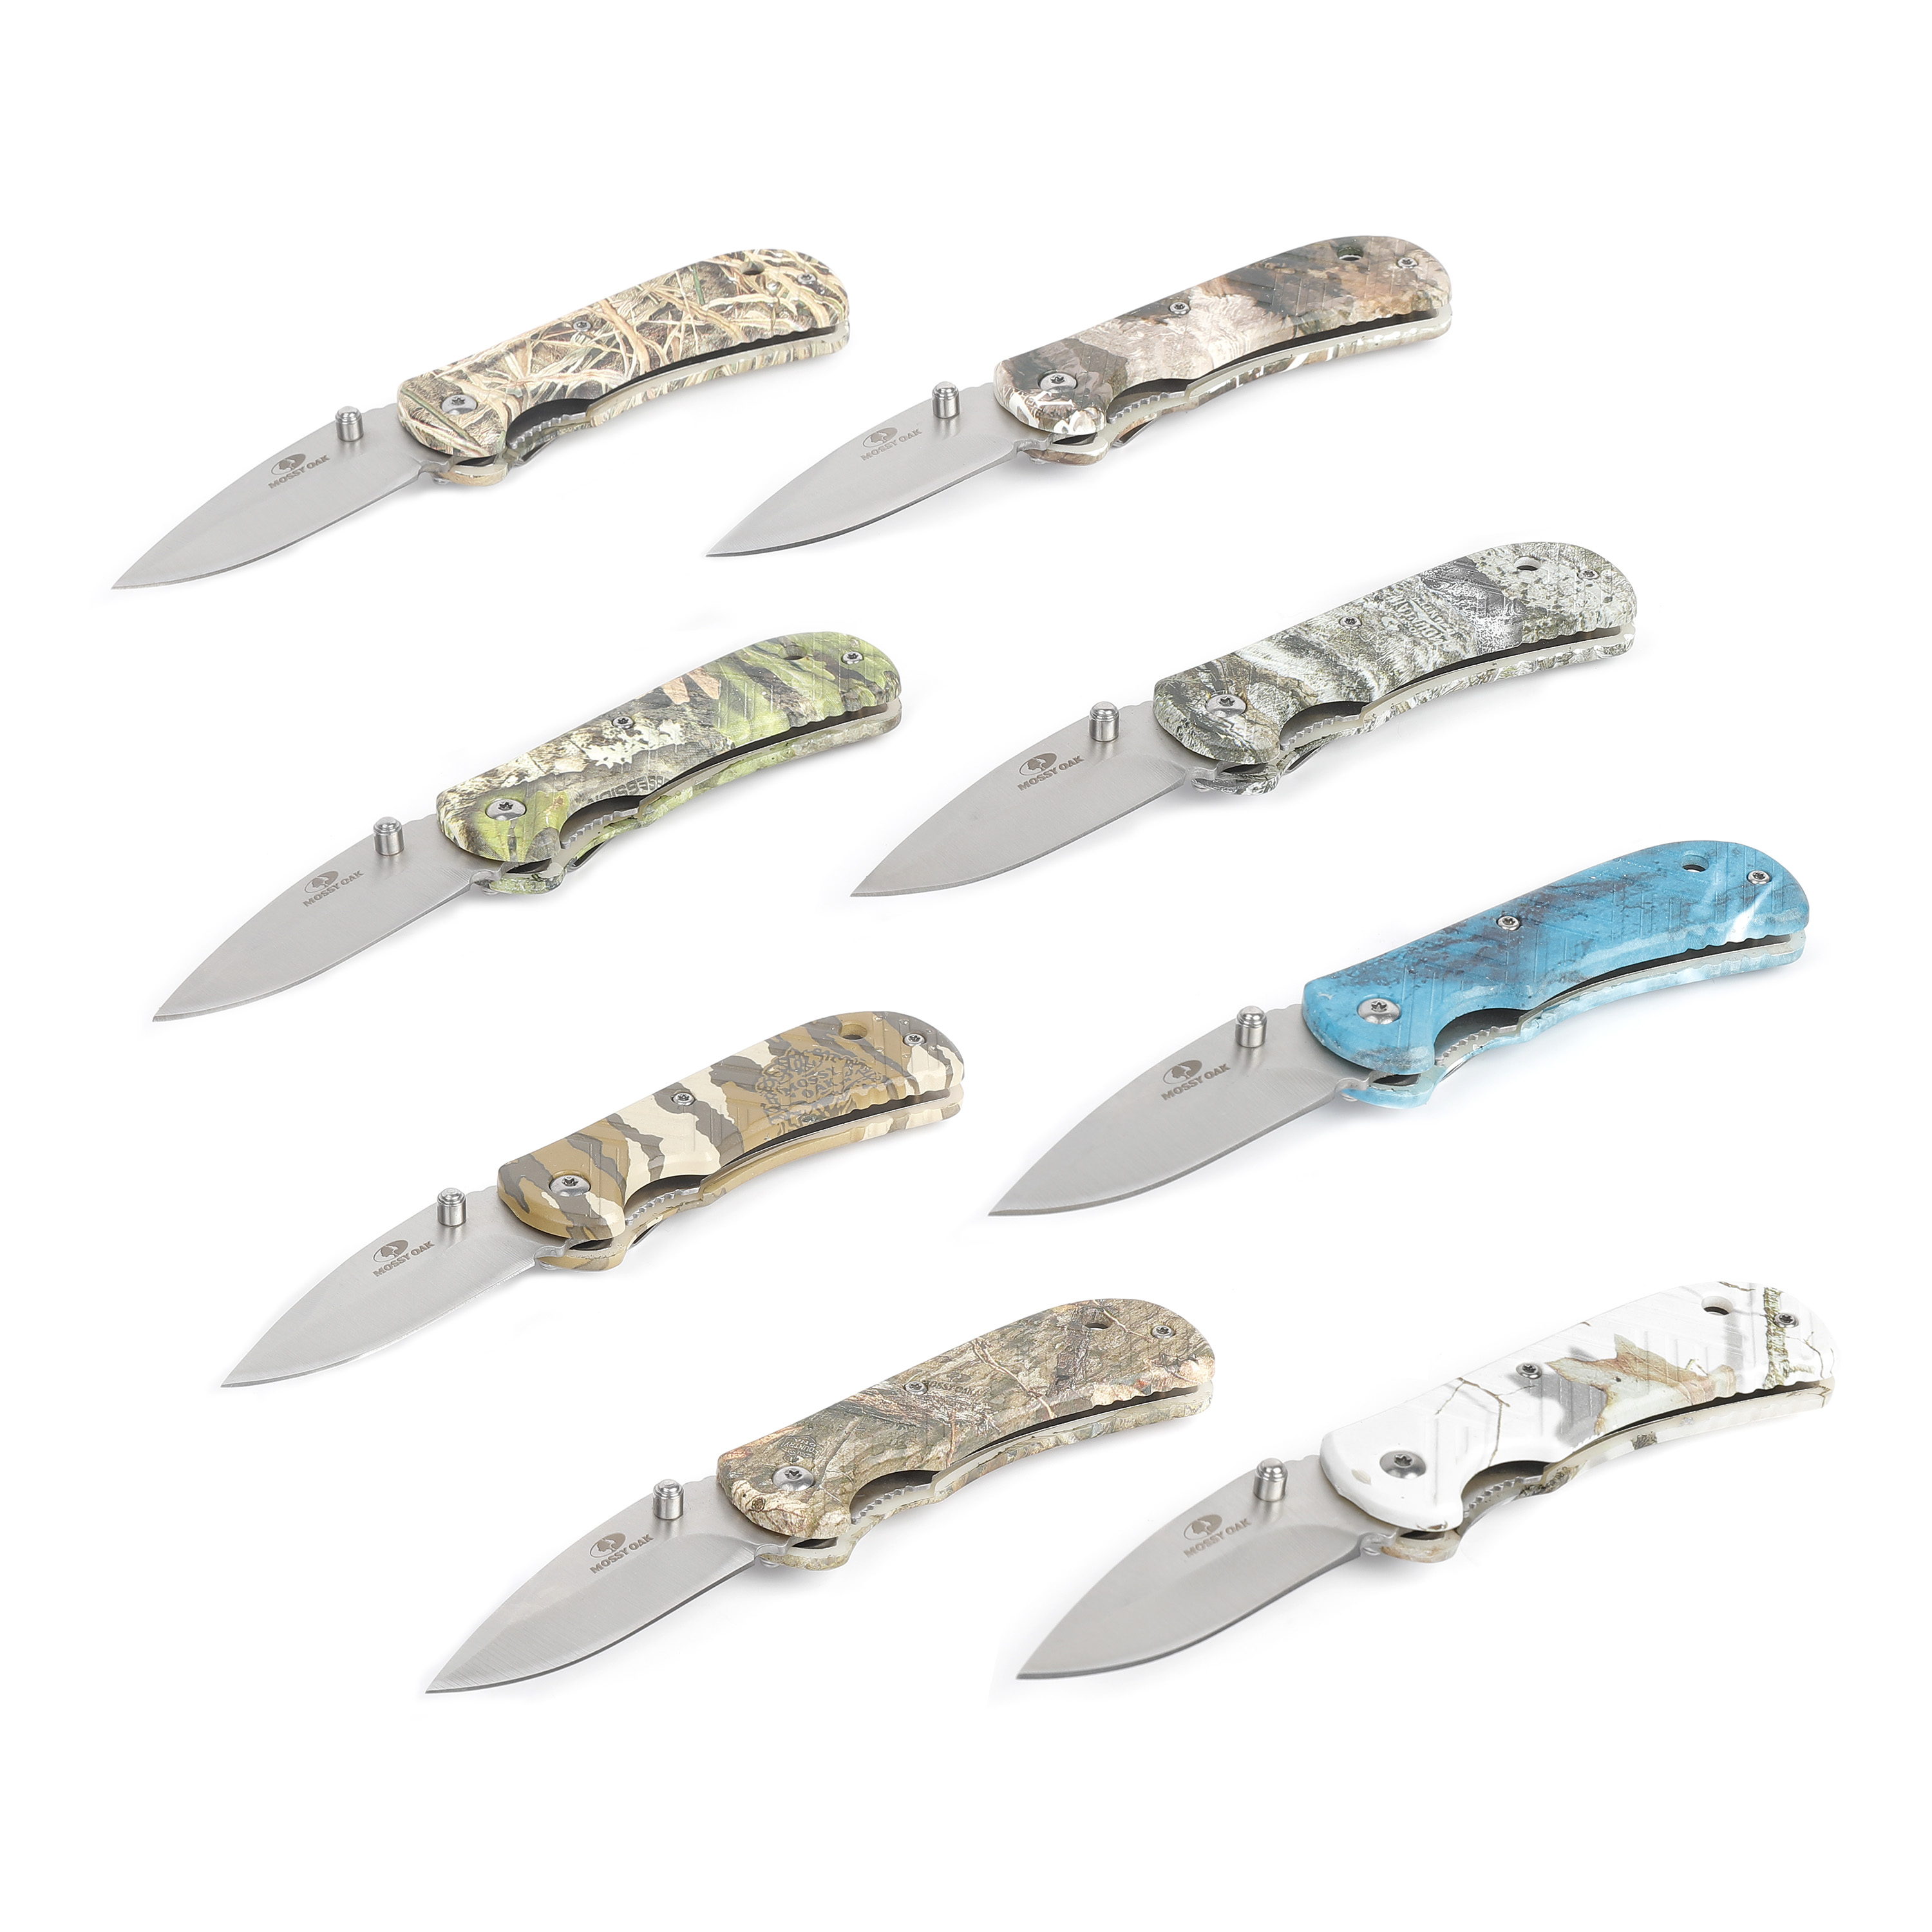 Mossy Oak 8 Piece Folding Pocket Knife Set, 2.5" Blade and 3.5" Handle - image 1 of 8